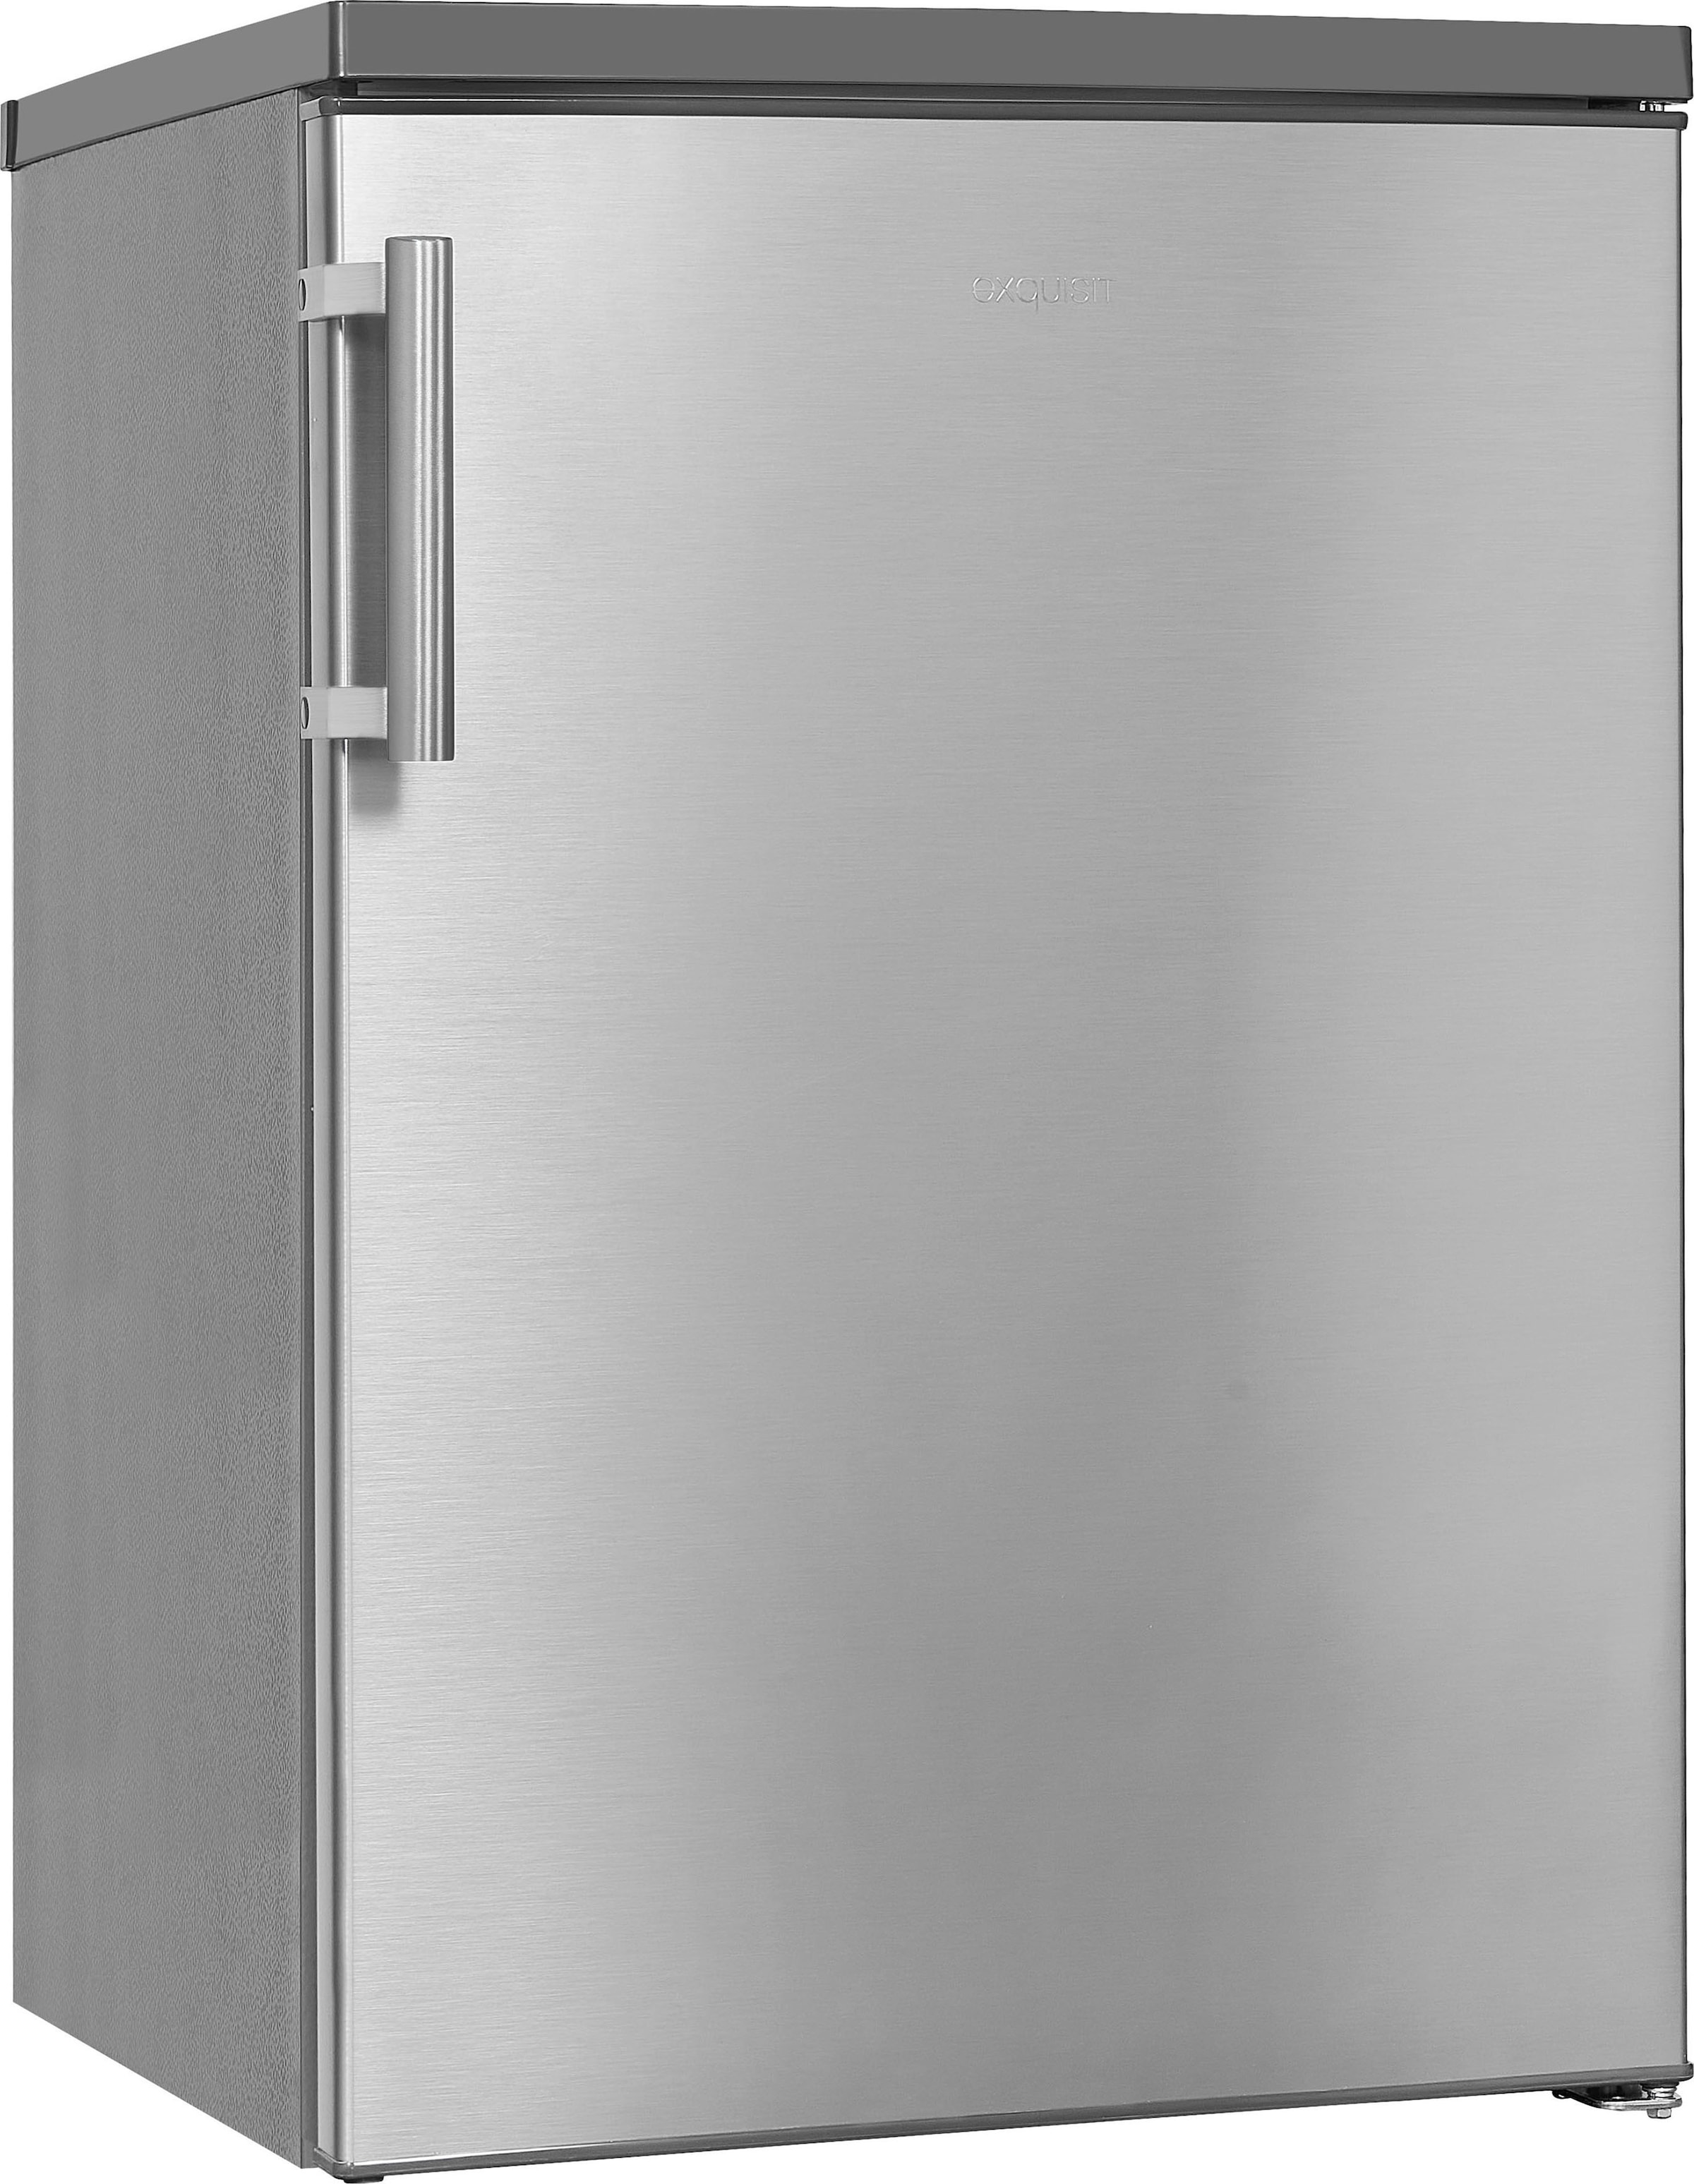 exquisit Vollraumkühlschrank »KS16-V-H-010E weiss«, KS16-V-H-010E inoxlook,  85 cm hoch, 56 cm breit per Rechnung | BAUR